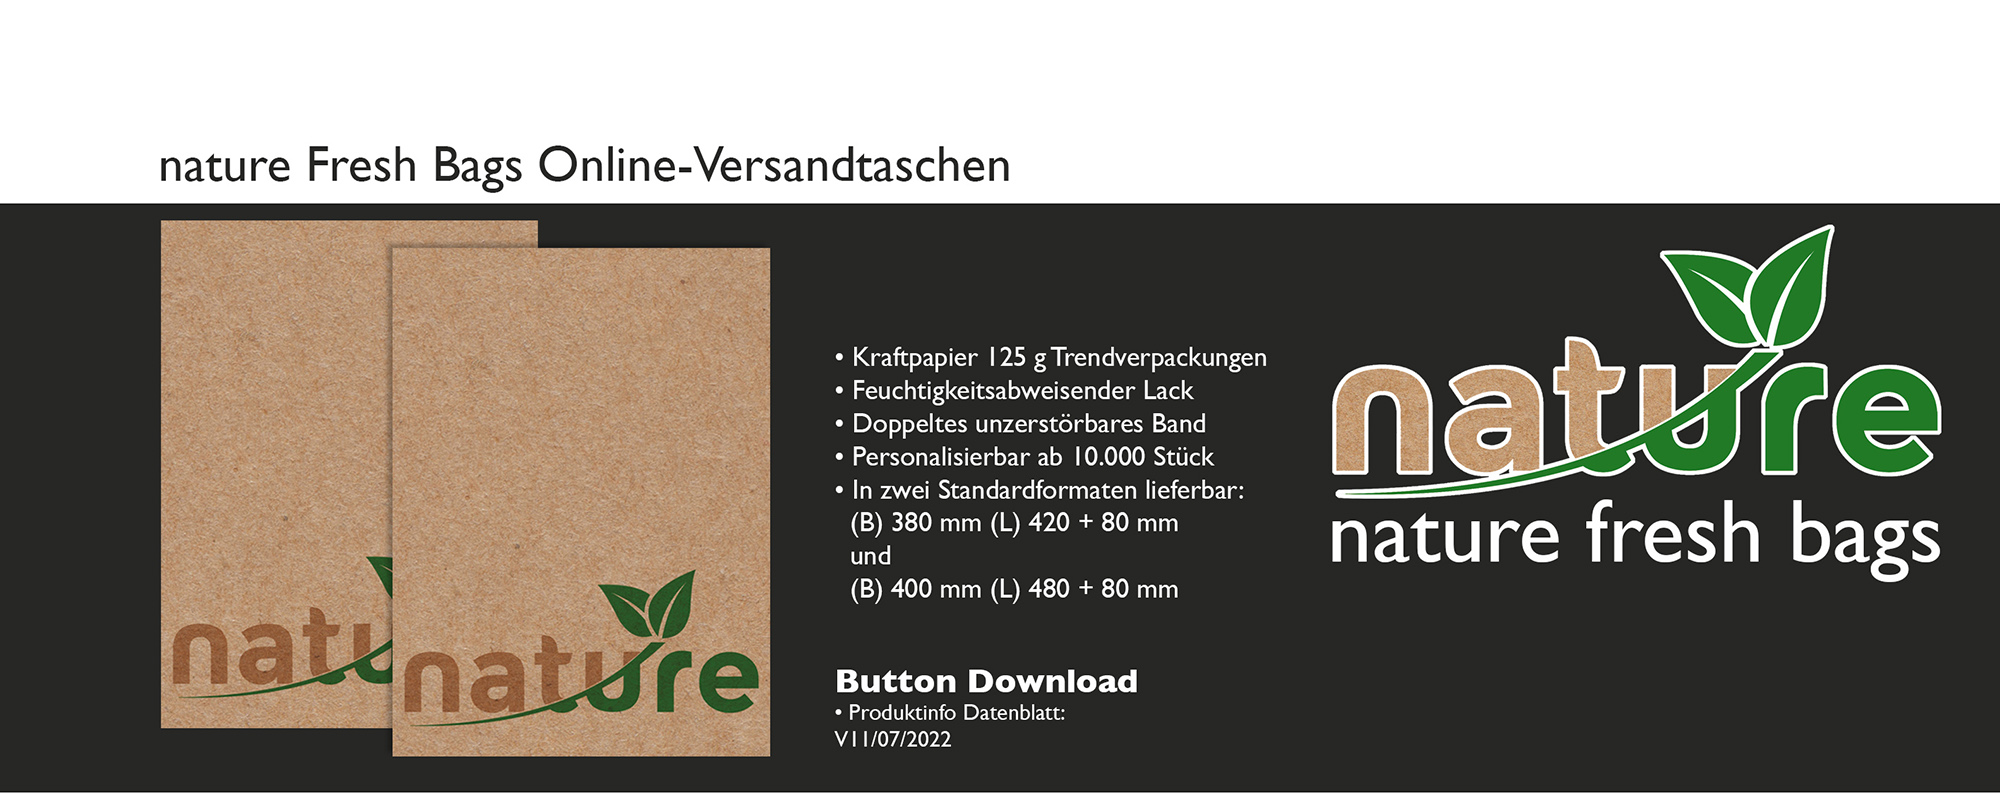 Austria Packaging Solution nature fresh bags Online Versandtaschen